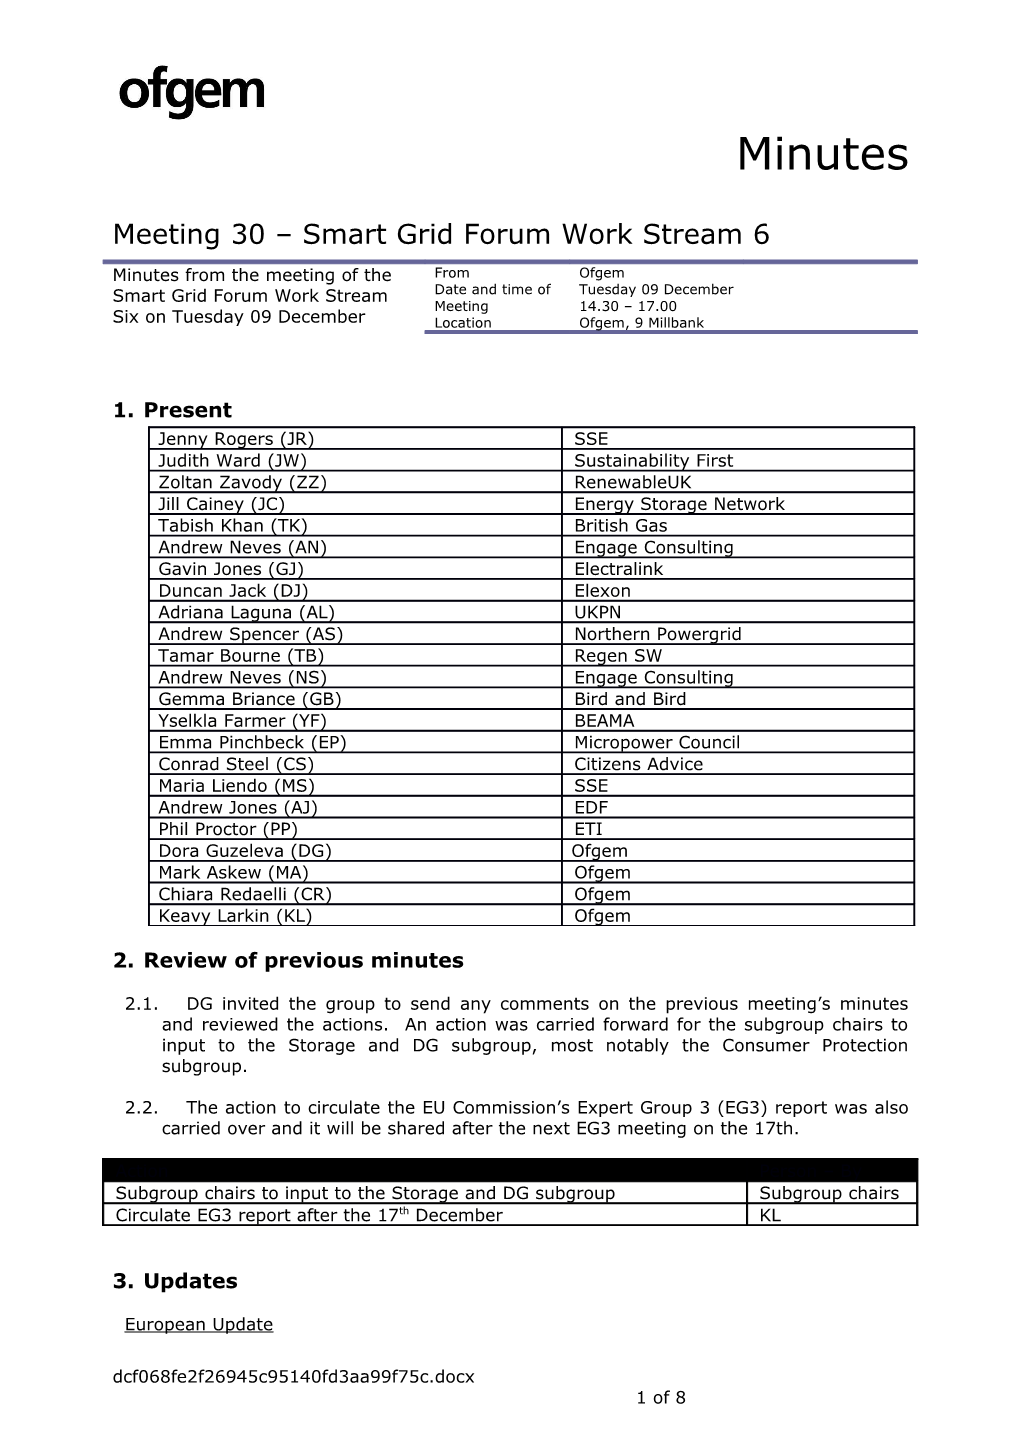 Meeting 30 Smart Grid Forum Work Stream 6